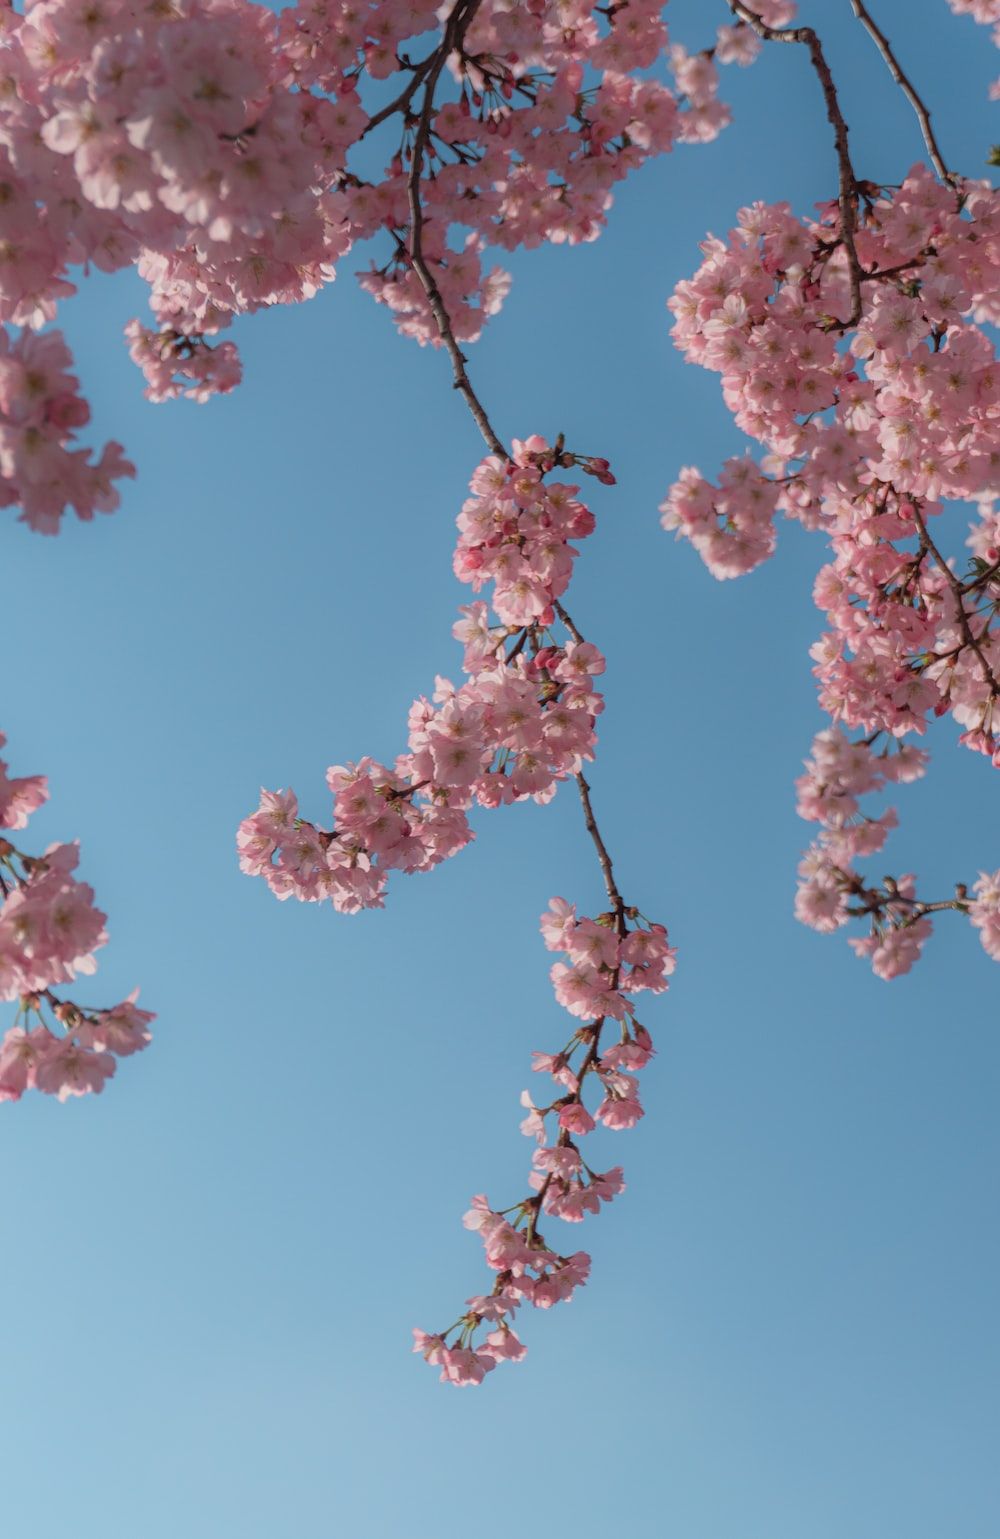 A branch of cherry blossoms against a blue sky - Blue, light blue